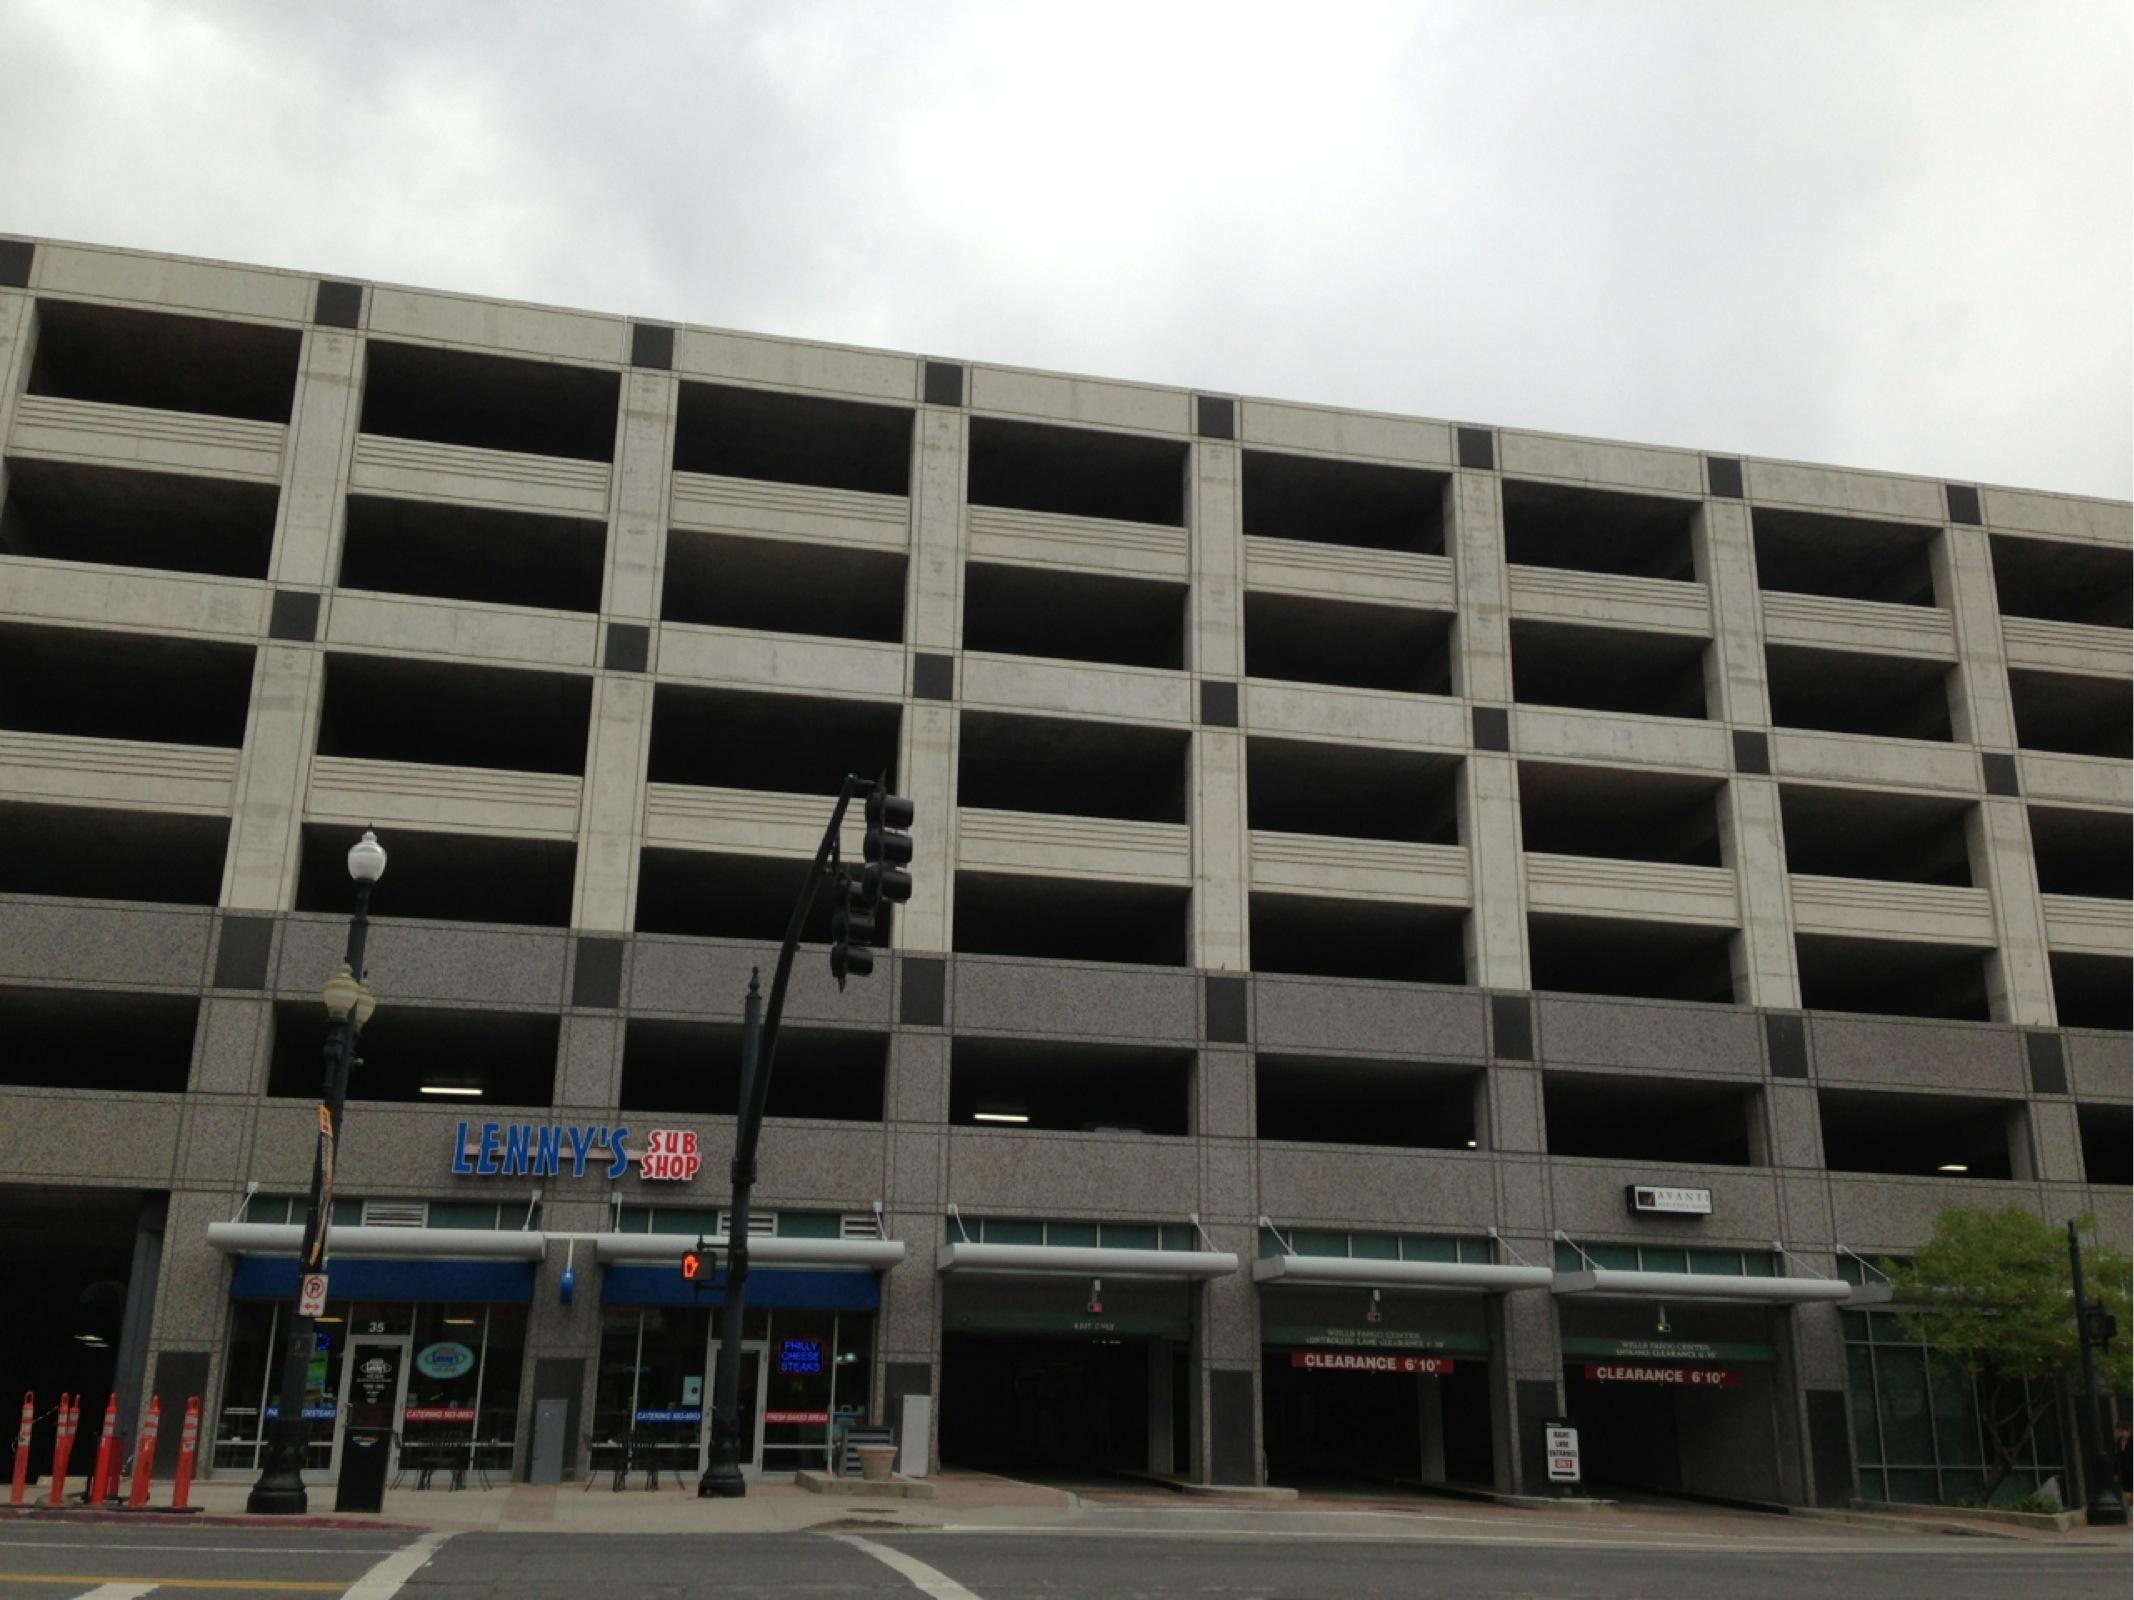 How to score amazing Wells Fargo Center parking spots?